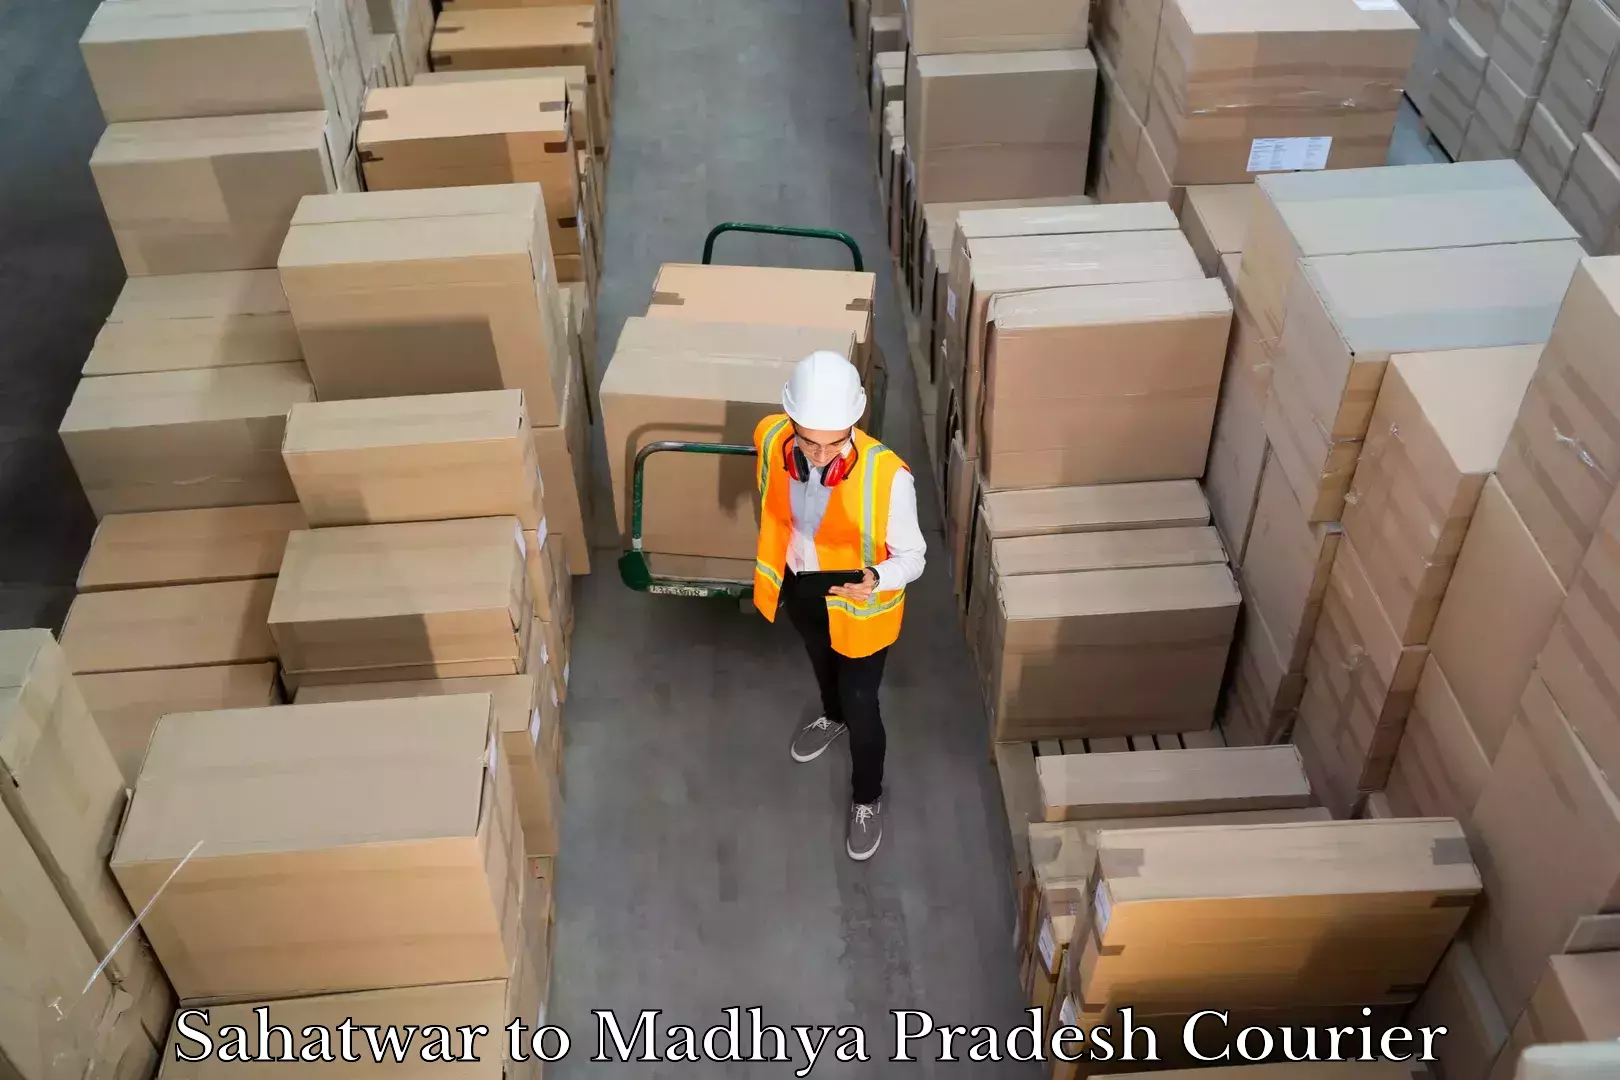 Luggage shipment specialists Sahatwar to Bargawan